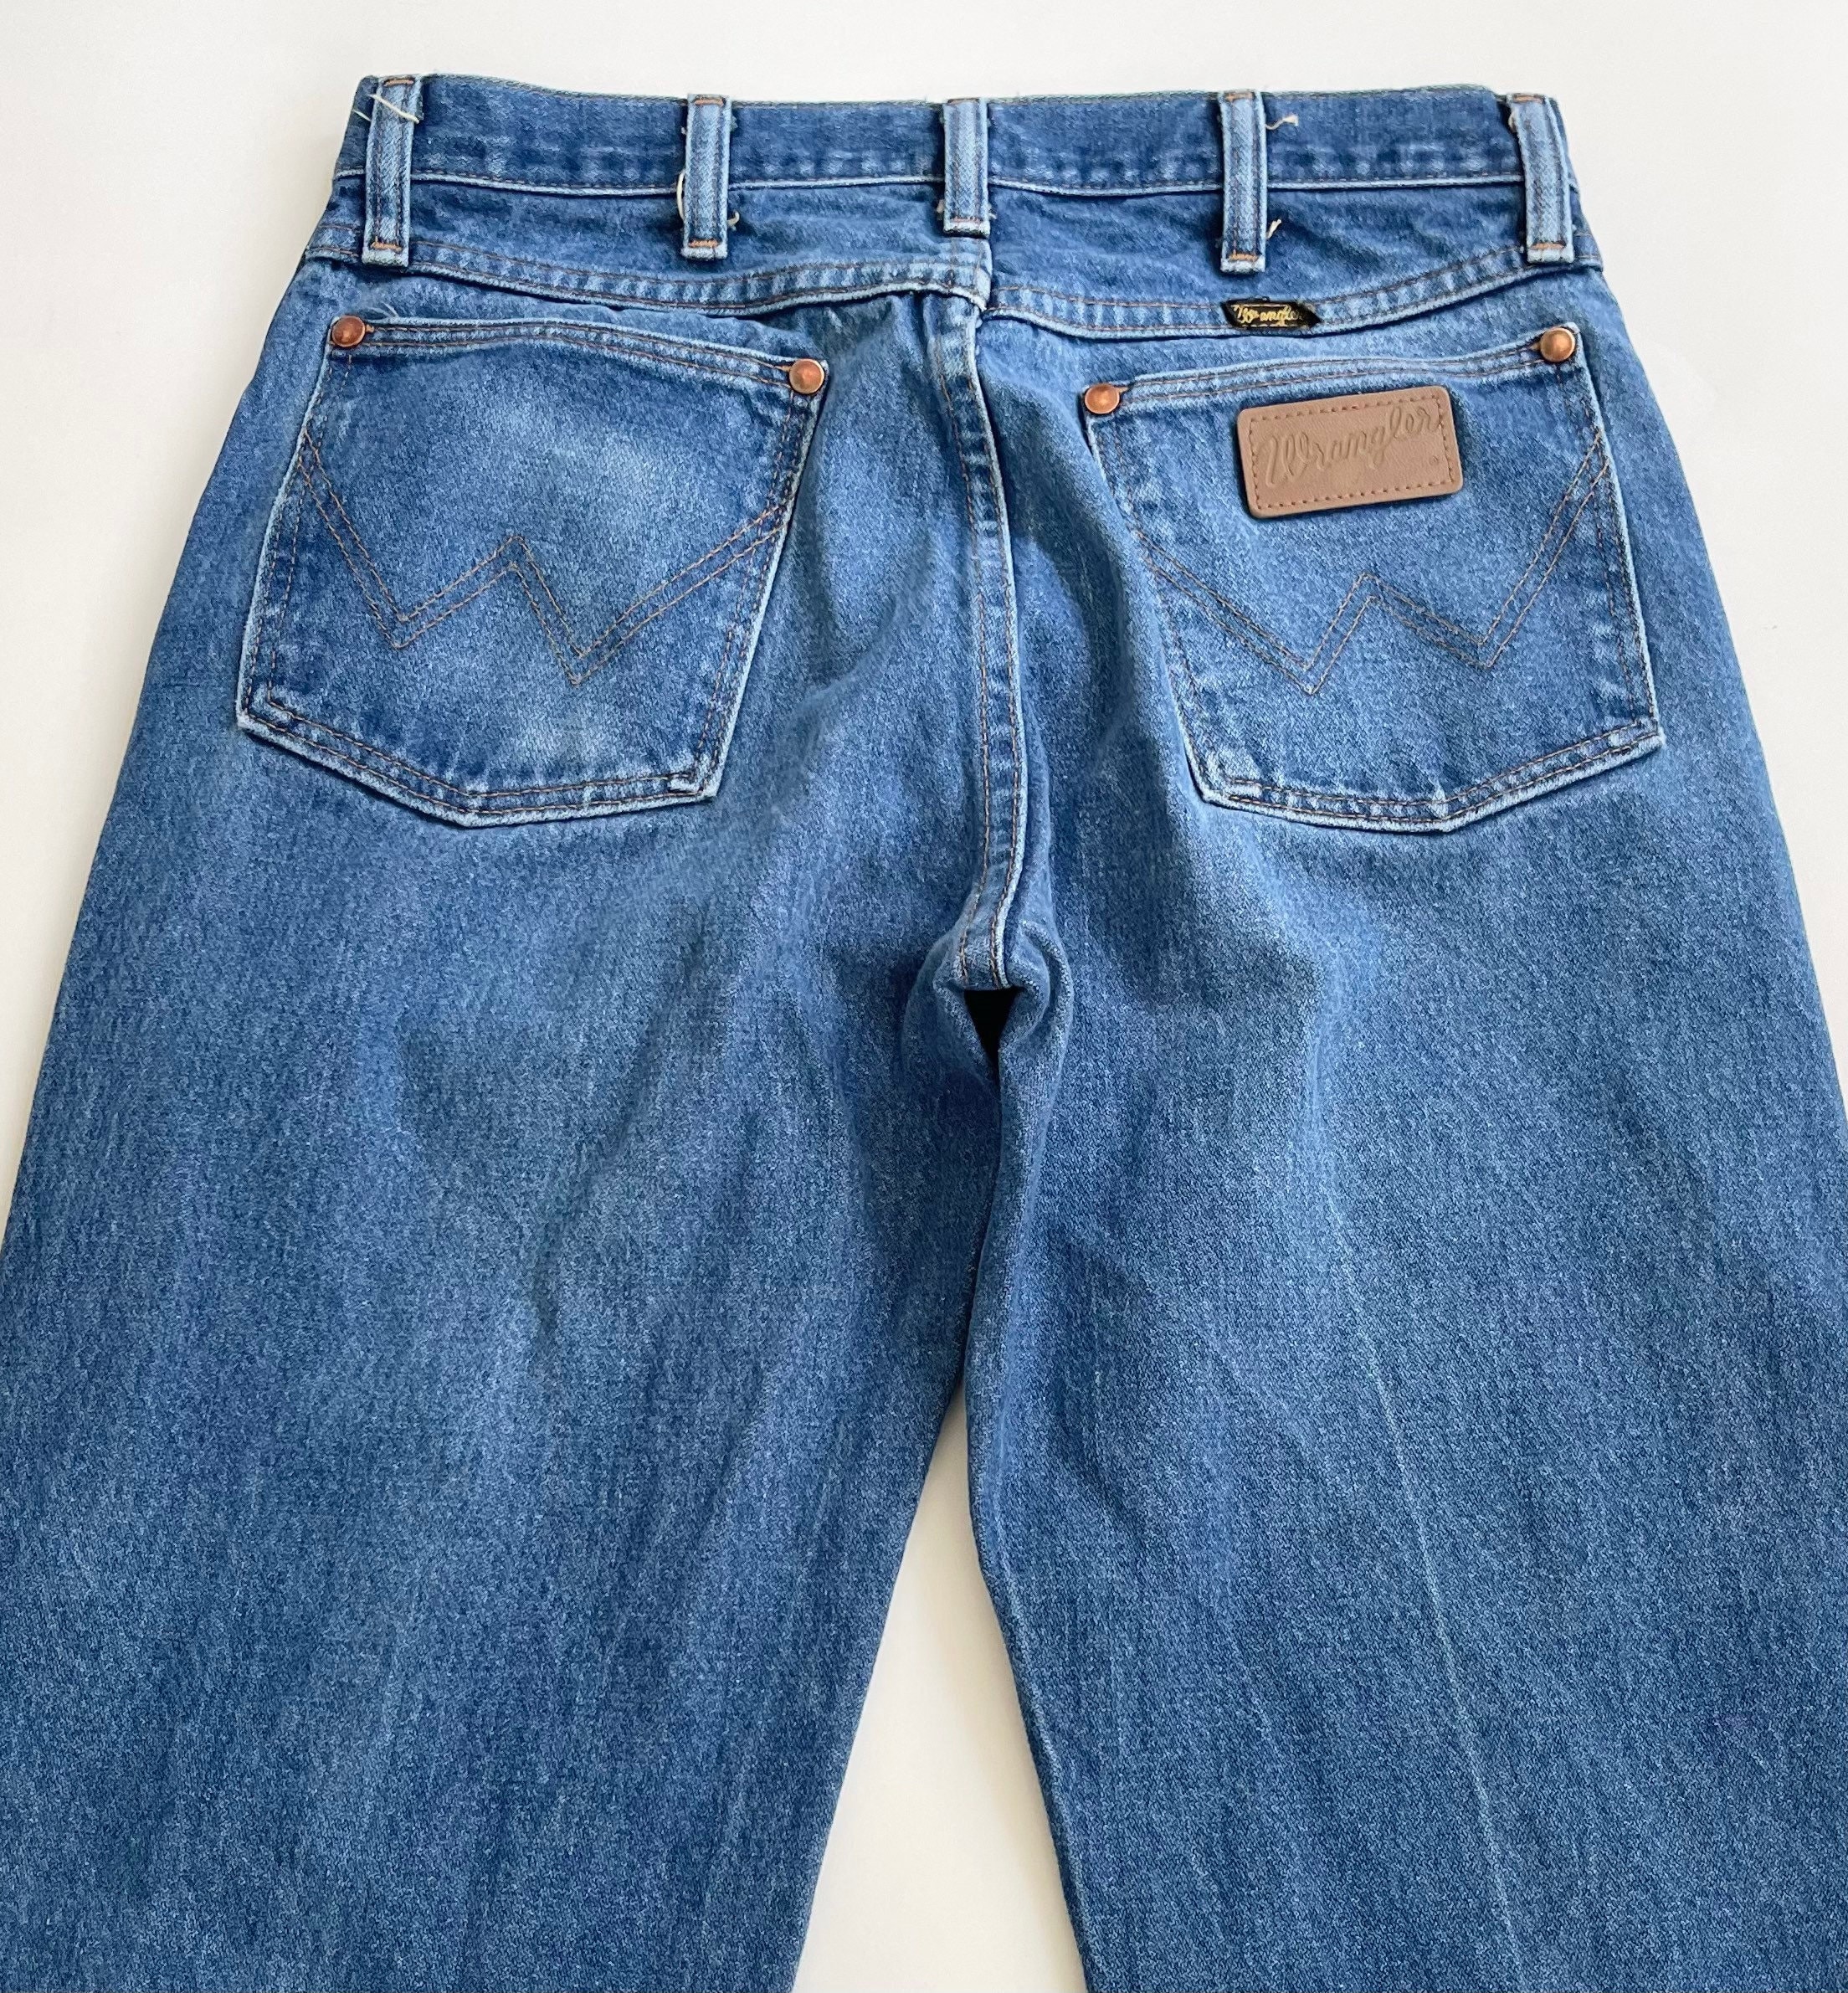 70s Wrangler Denim Jeans Pants Faded Medium Vintage Wash All Cotton 80s ...